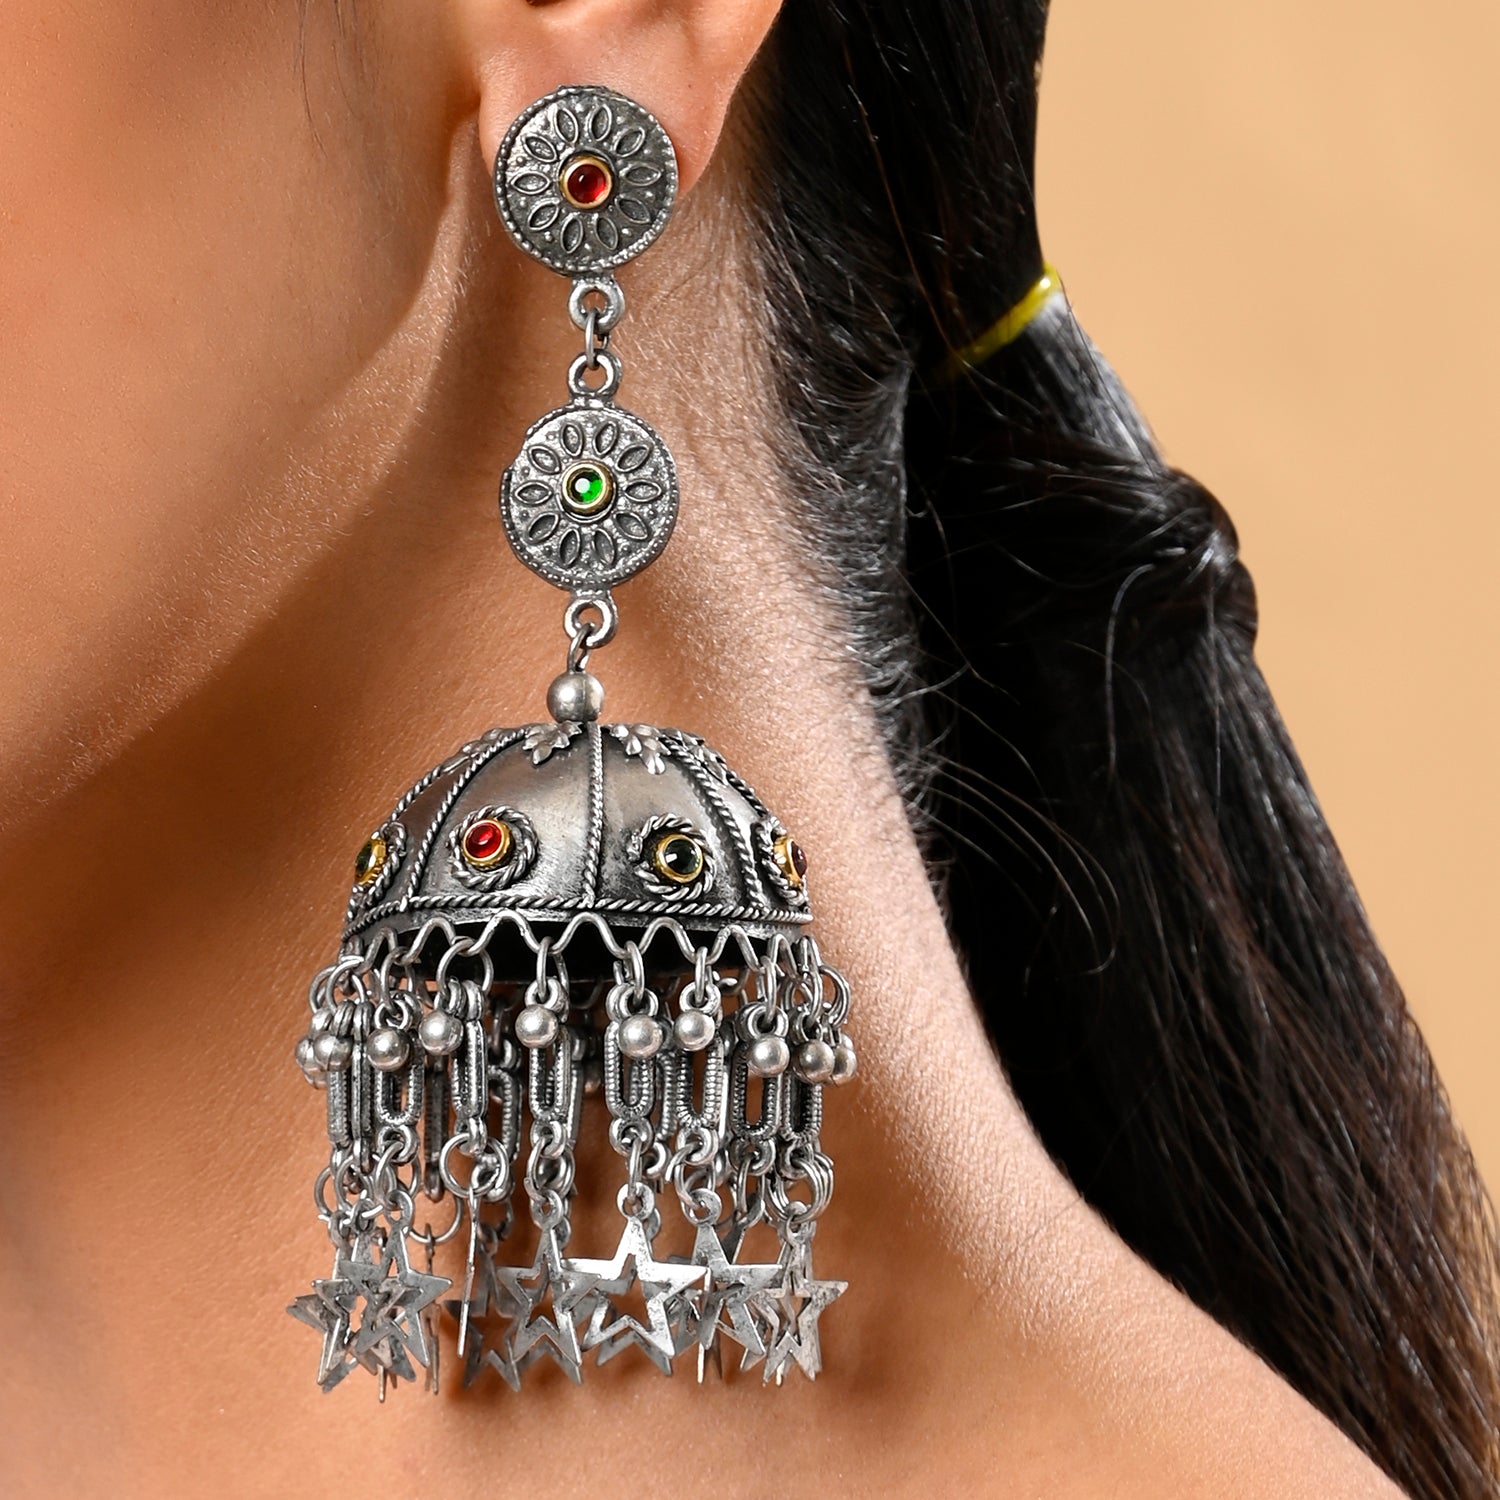 Folklore wooden blue painted earrings - lightweight